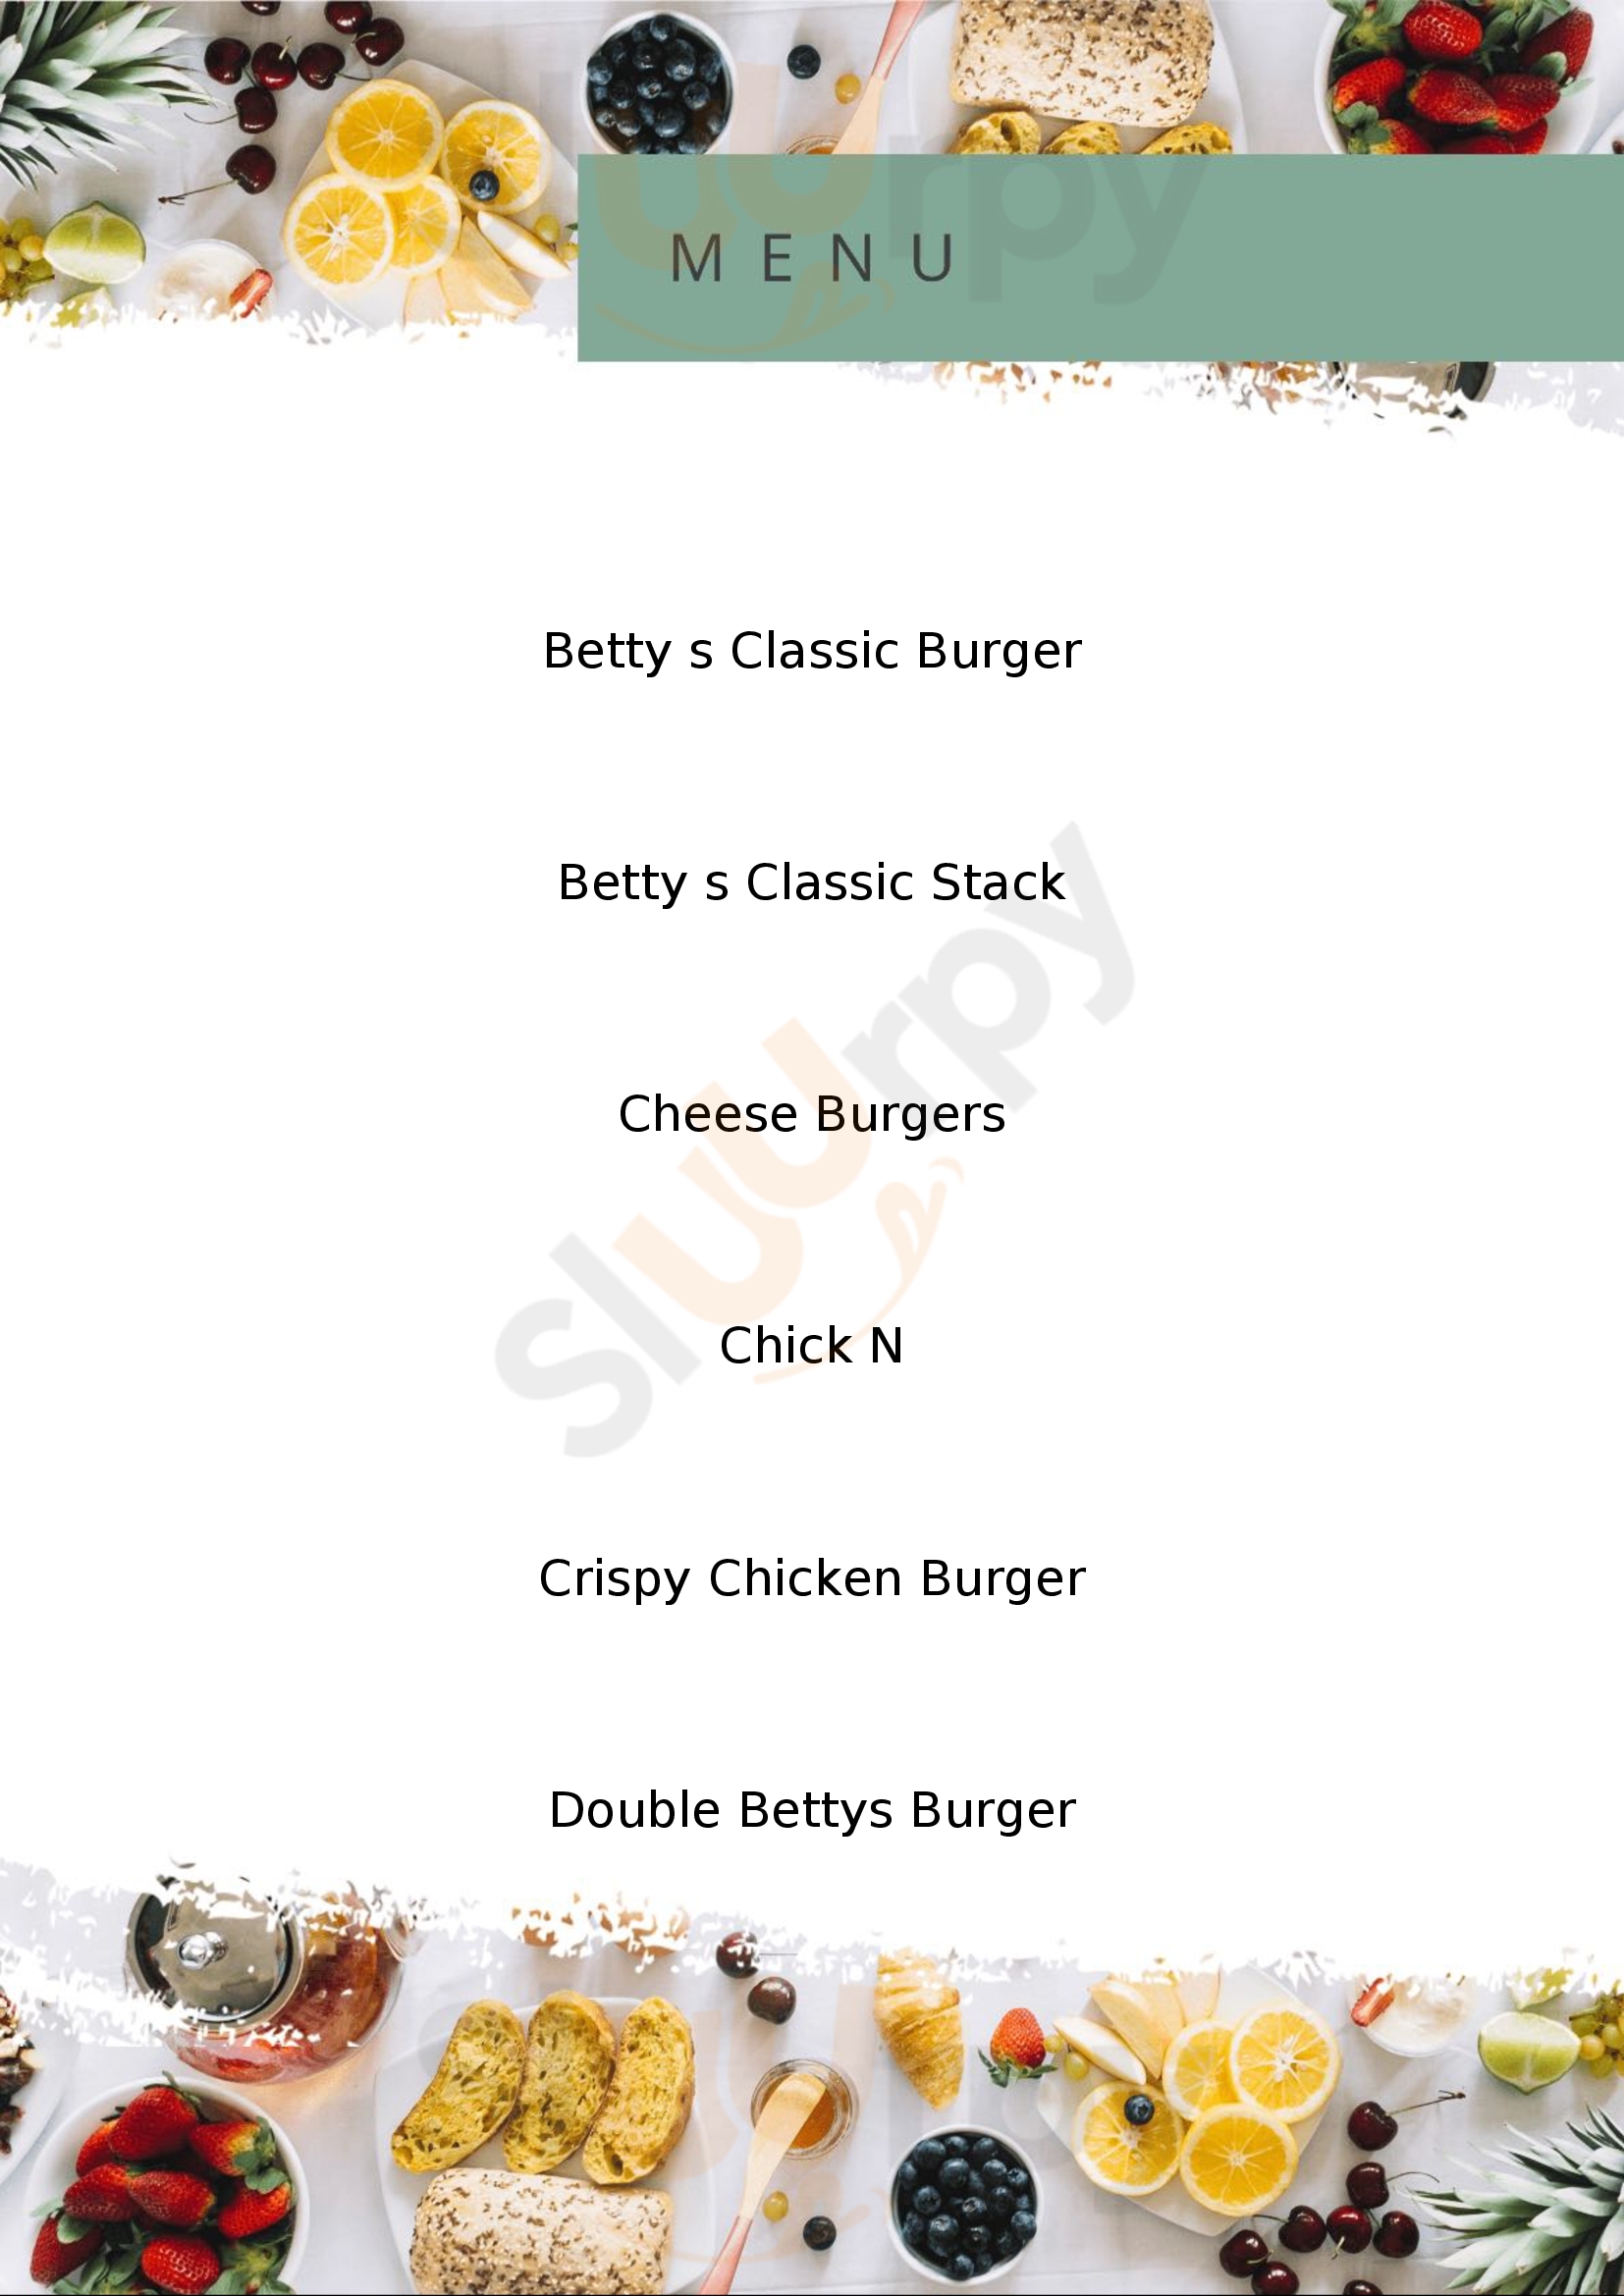 Betty's Burgers Maroochydore Menu - 1